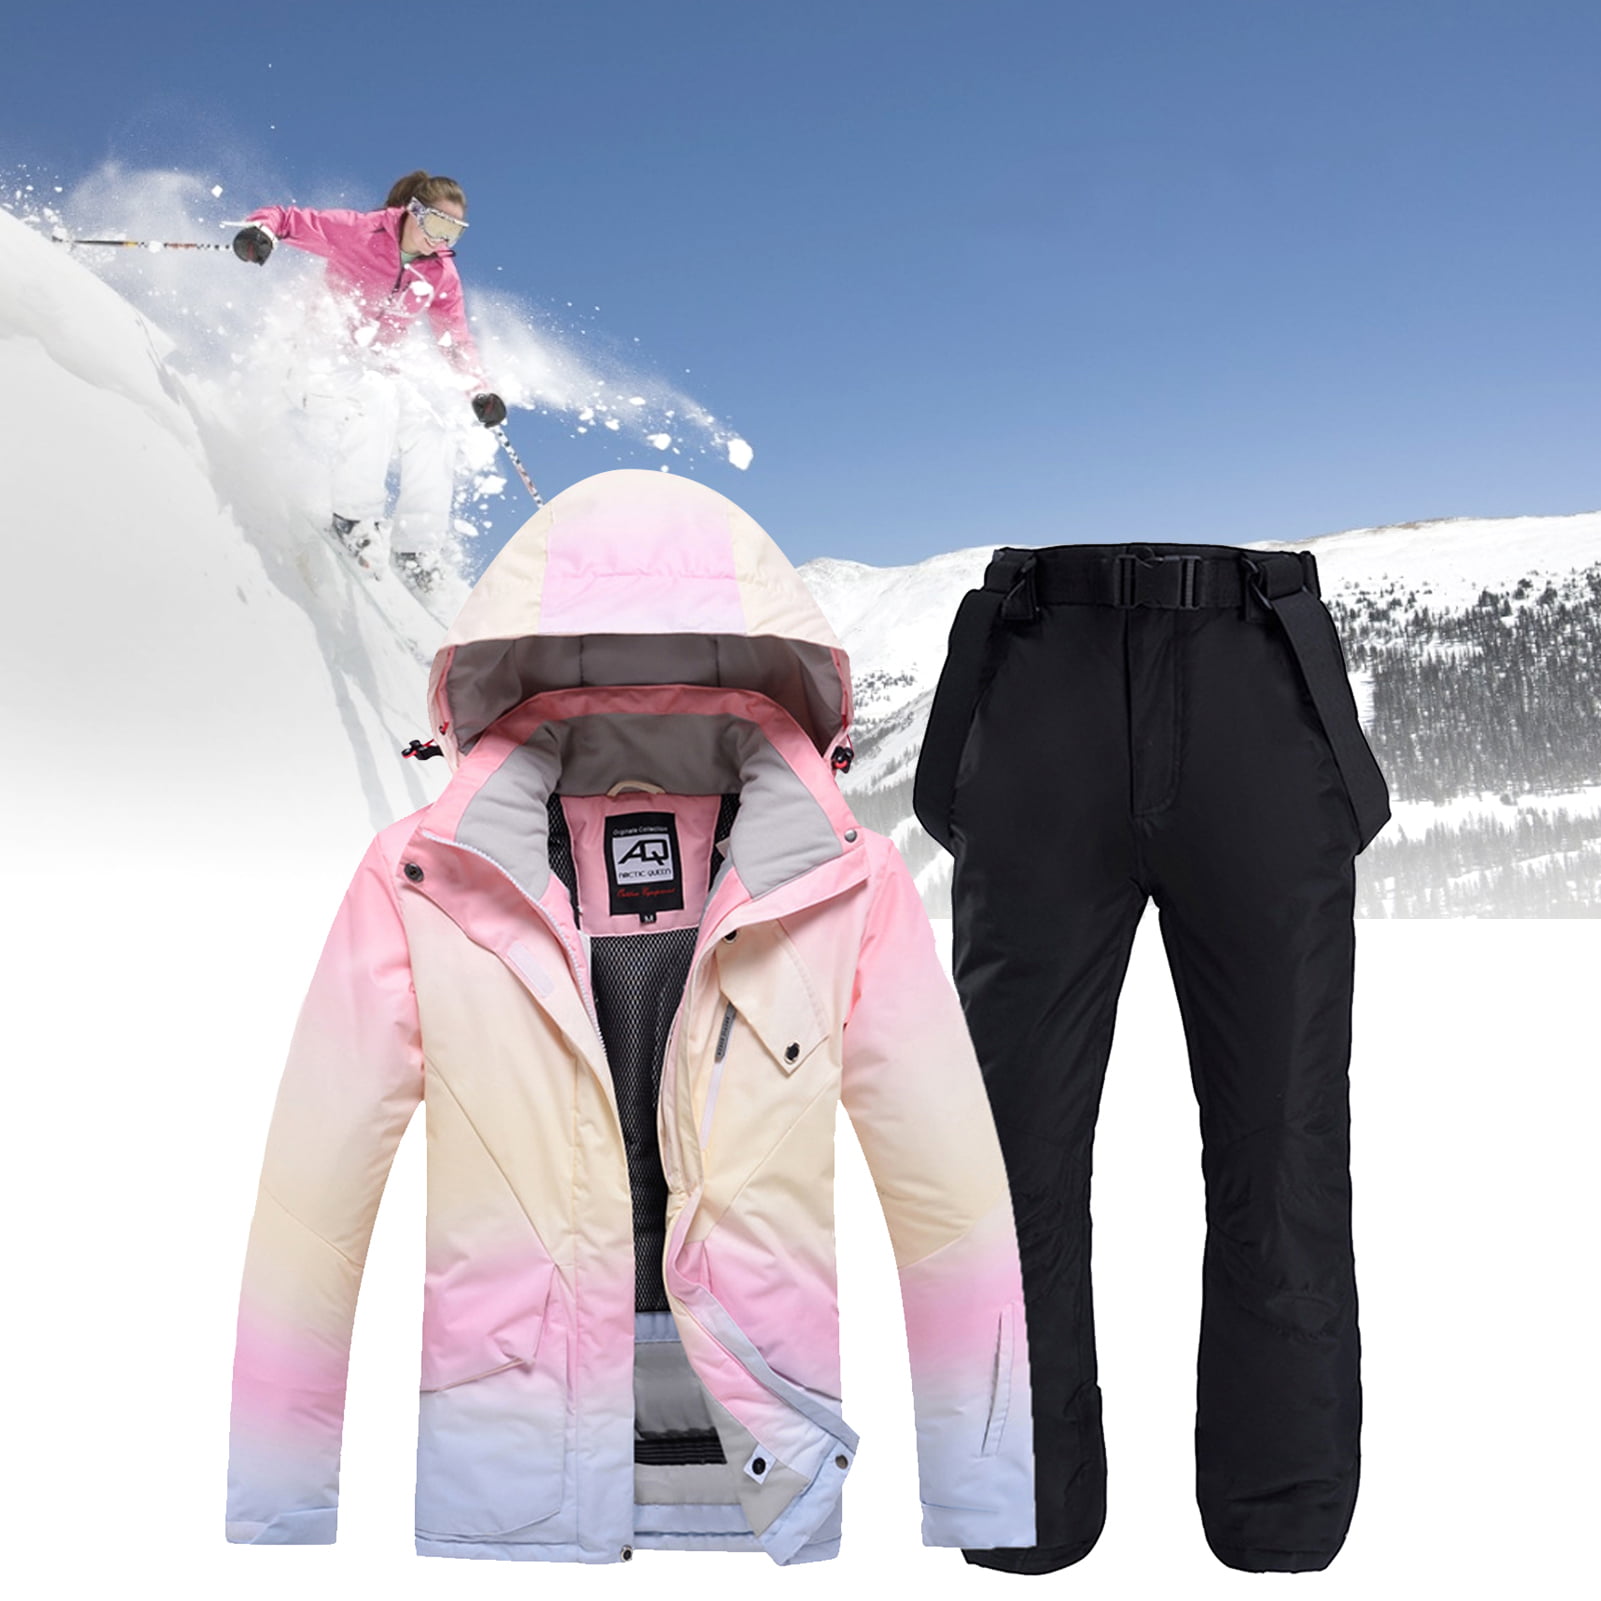 Snow Pant Details about   Shining Men's Women's Snow Suit Snowboarding Outdoor Winter Jacket 